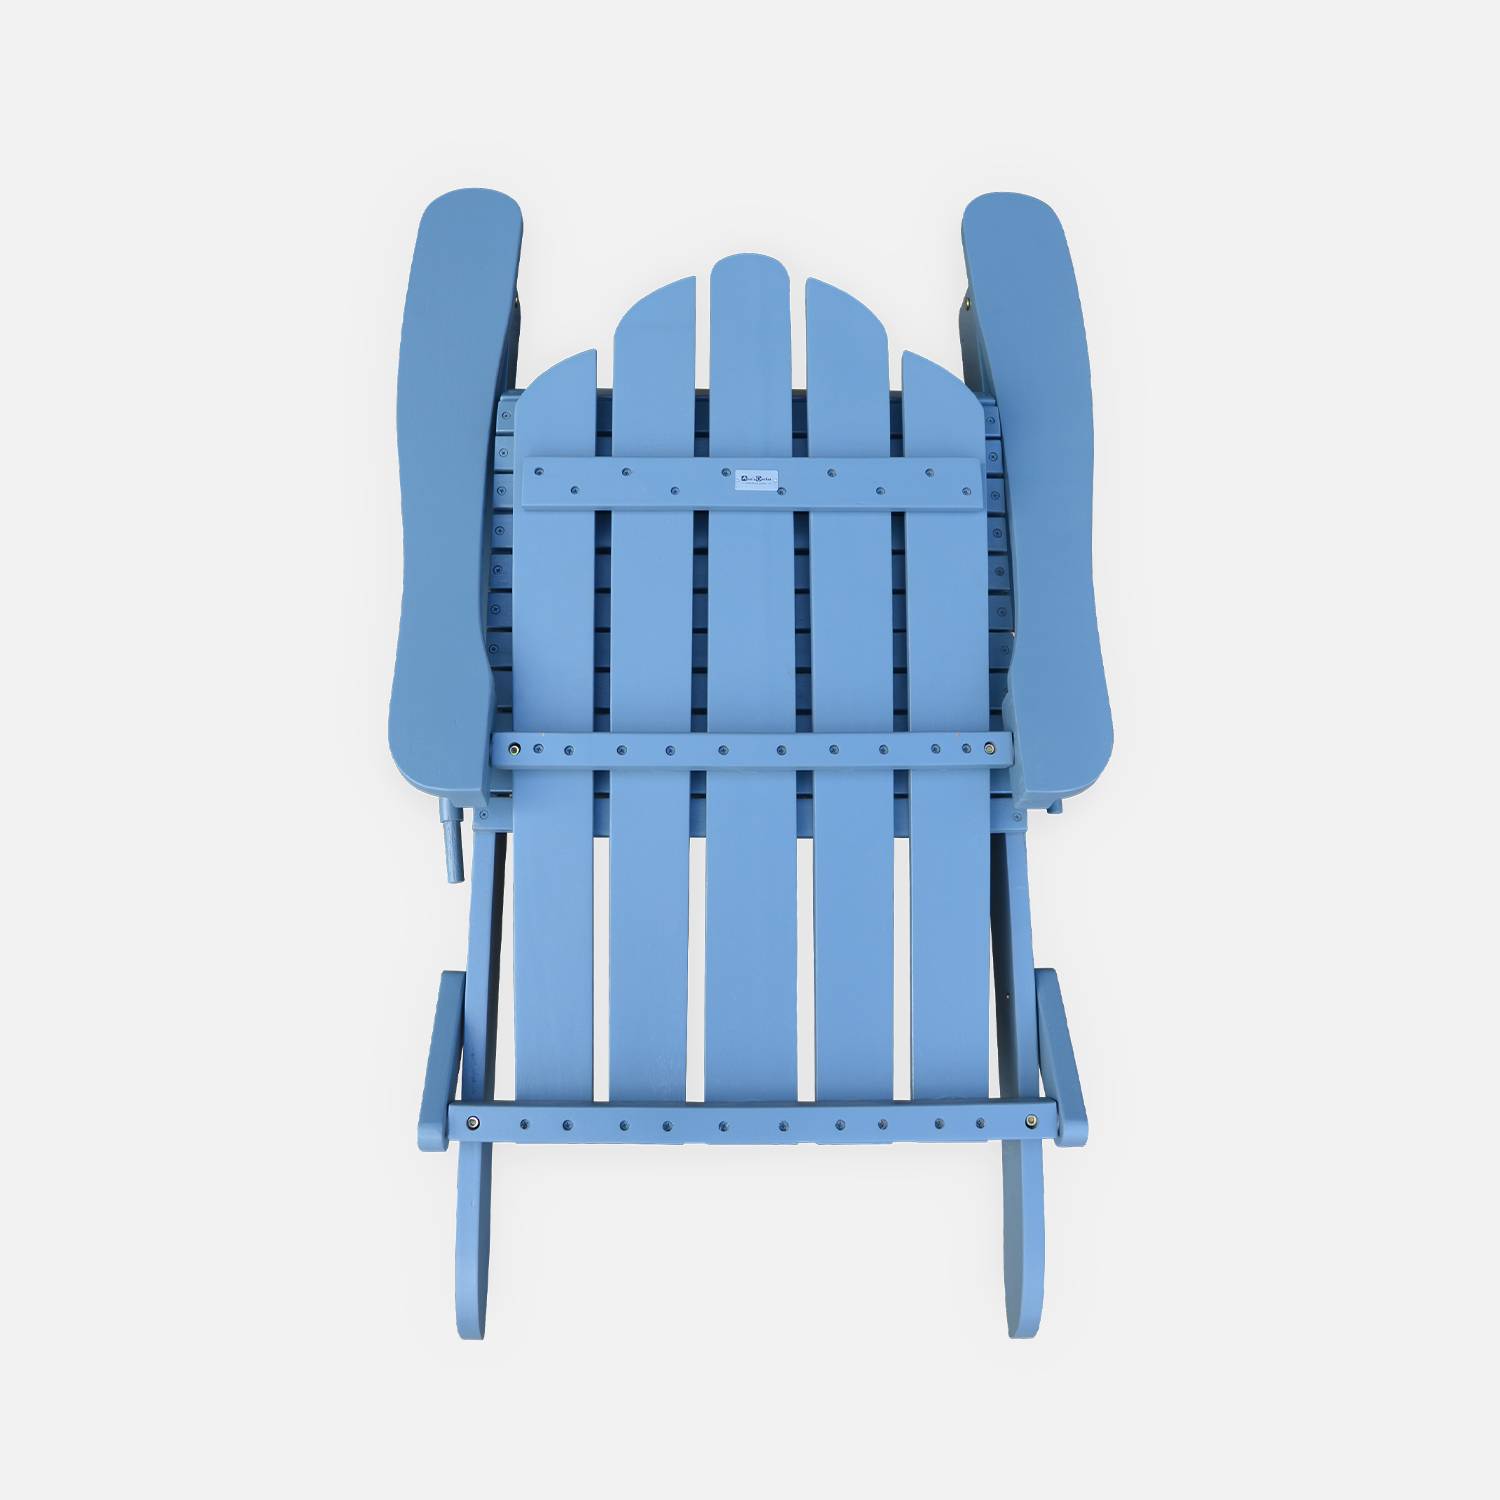 Adirondack Garden Armchair - Foldable, Wooden, Eucalyptus, Retro-style Relax Chair - Grey Blue Photo5